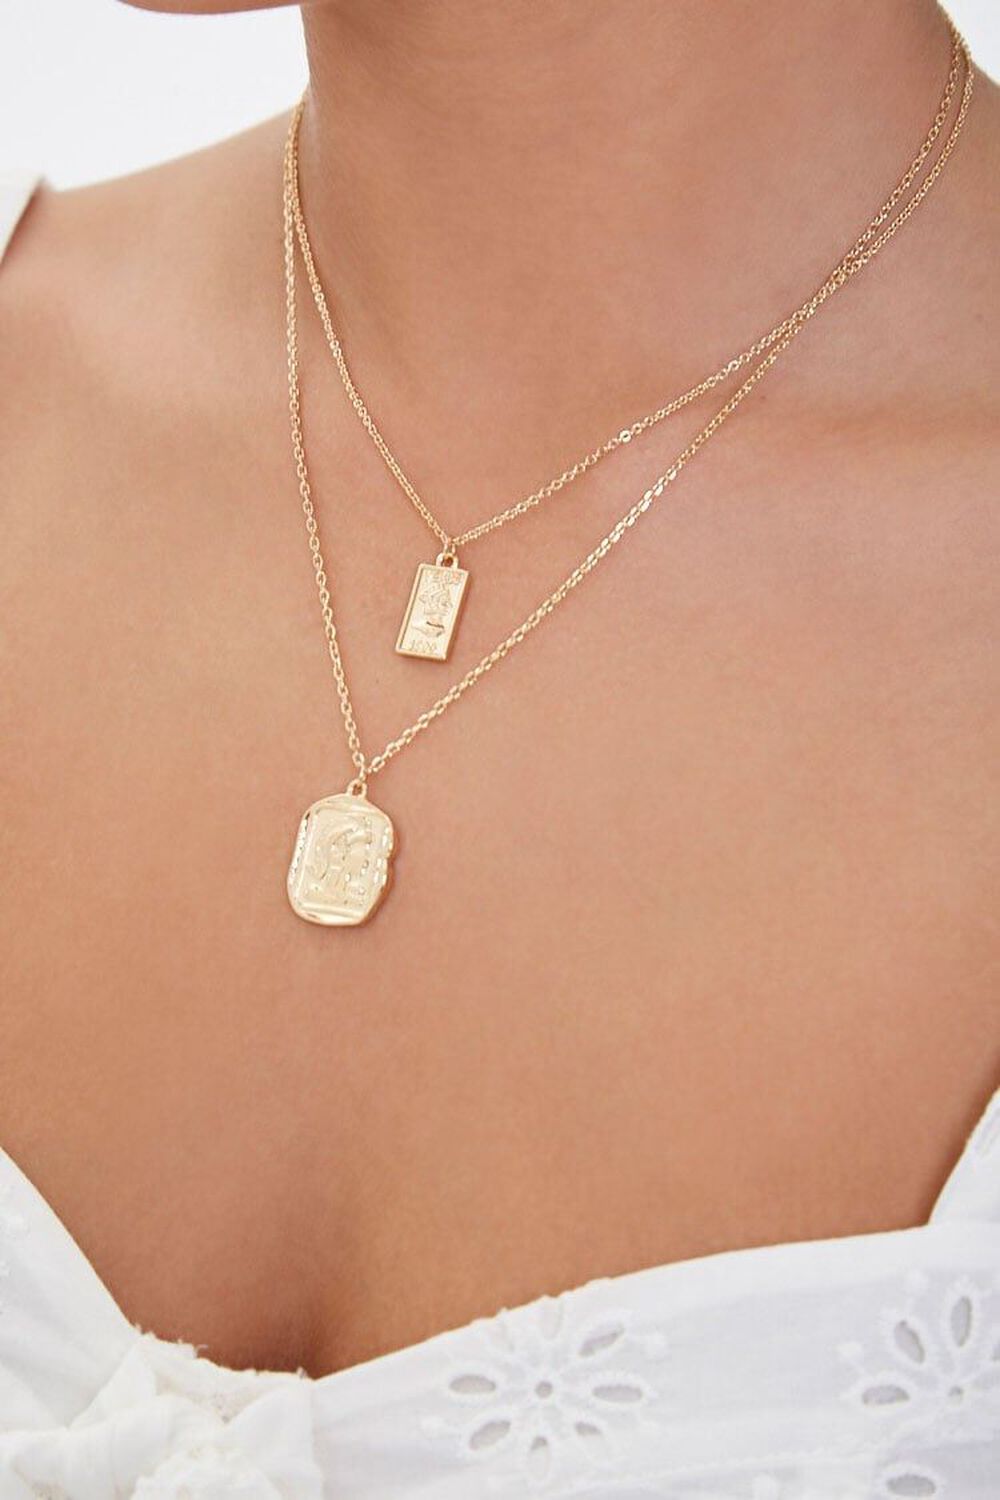 GOLD Layered Pendant Necklace, image 1